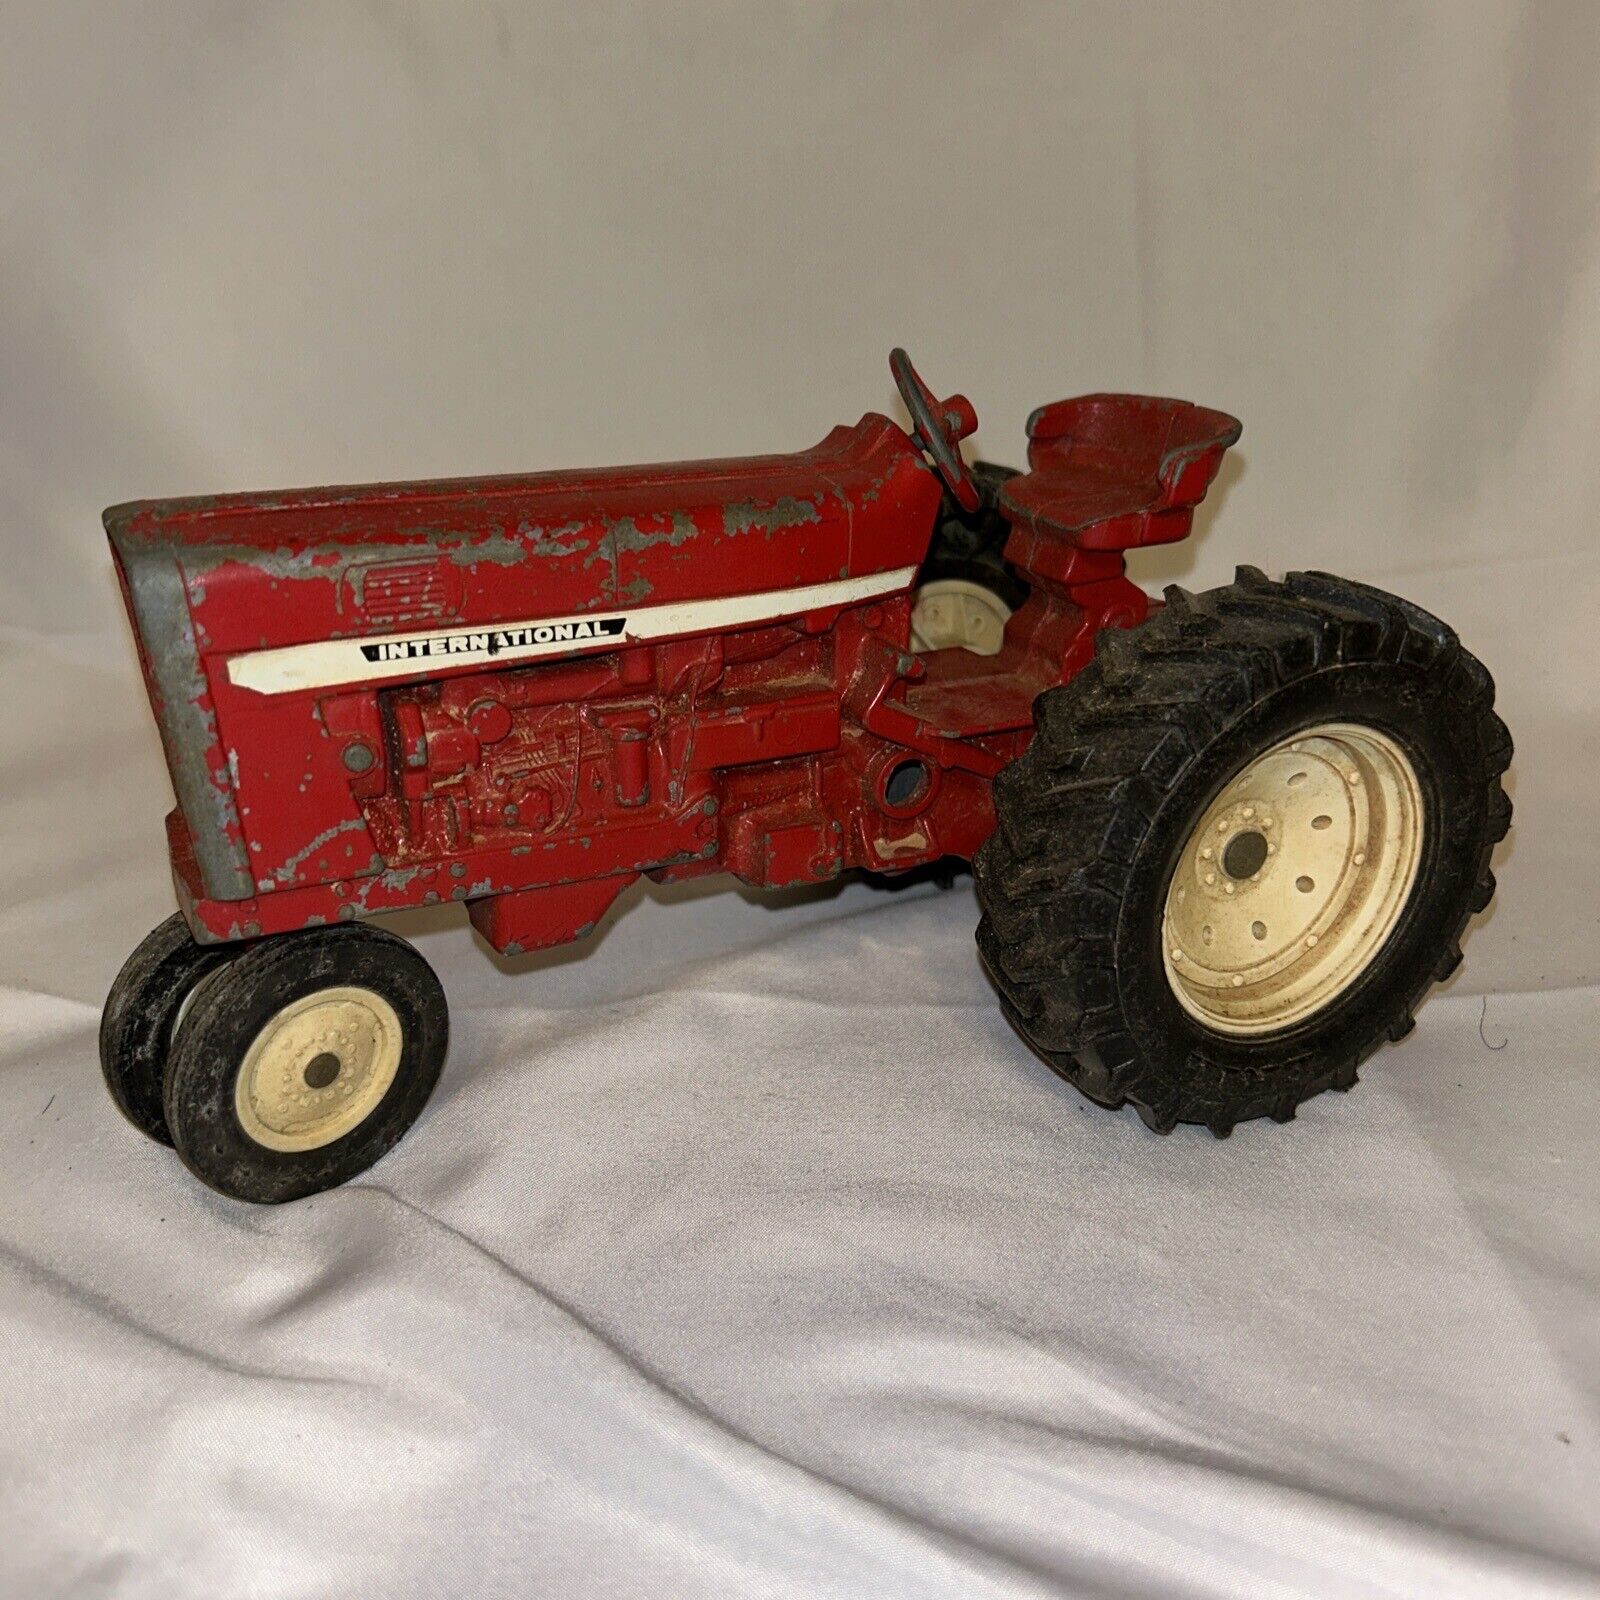 ERTL International Tractor Red Metal Tractor Toy 18-4-34 Vintage Antique